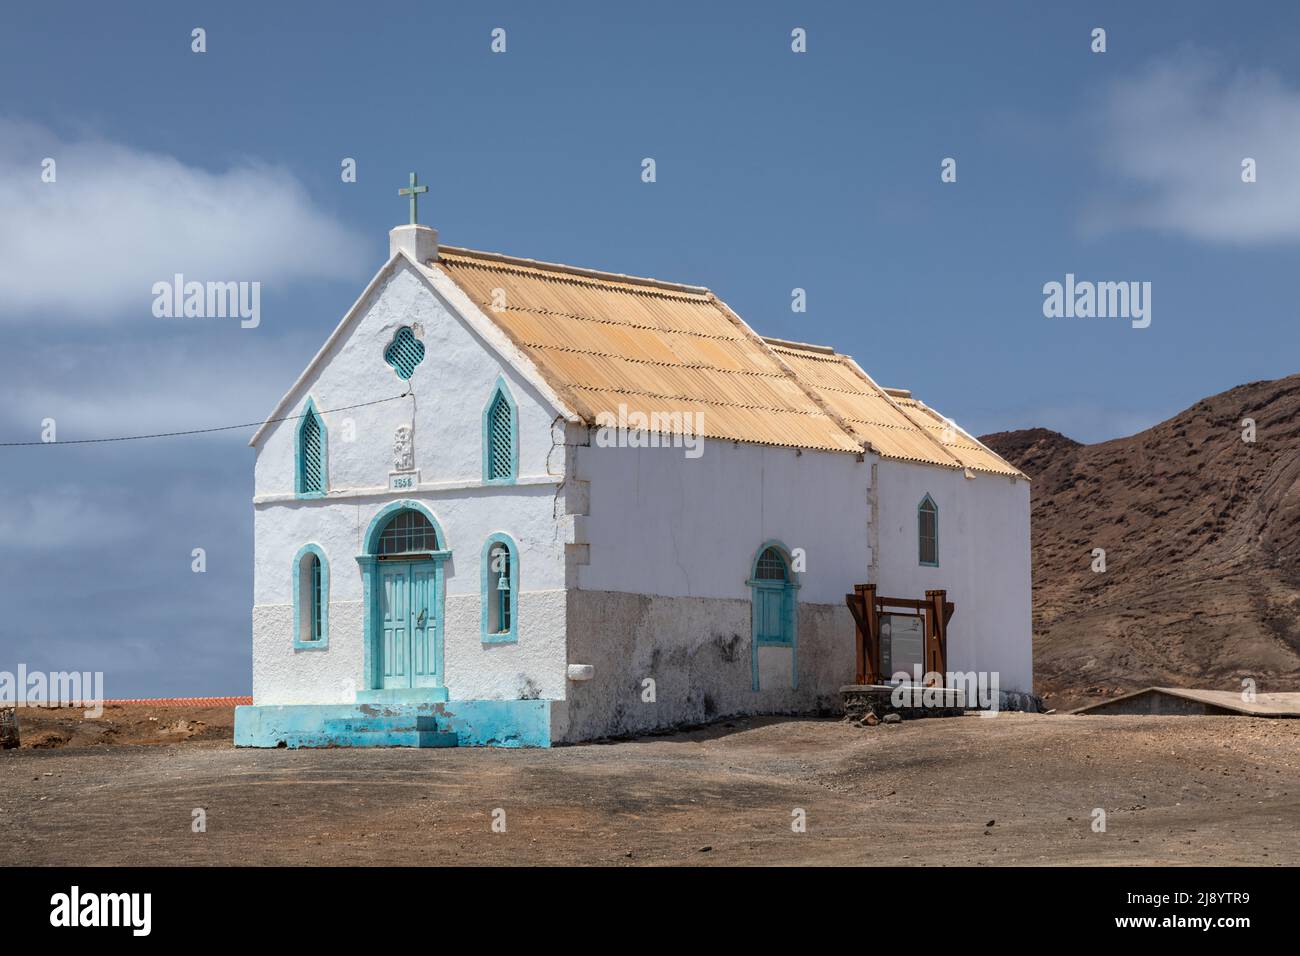 Malerische, weiß bemalte Lady Compassion Chapel in Pedra de Lume, Sal Island, Kap Verde, Cabo Verde Inseln, Afrika Stockfoto